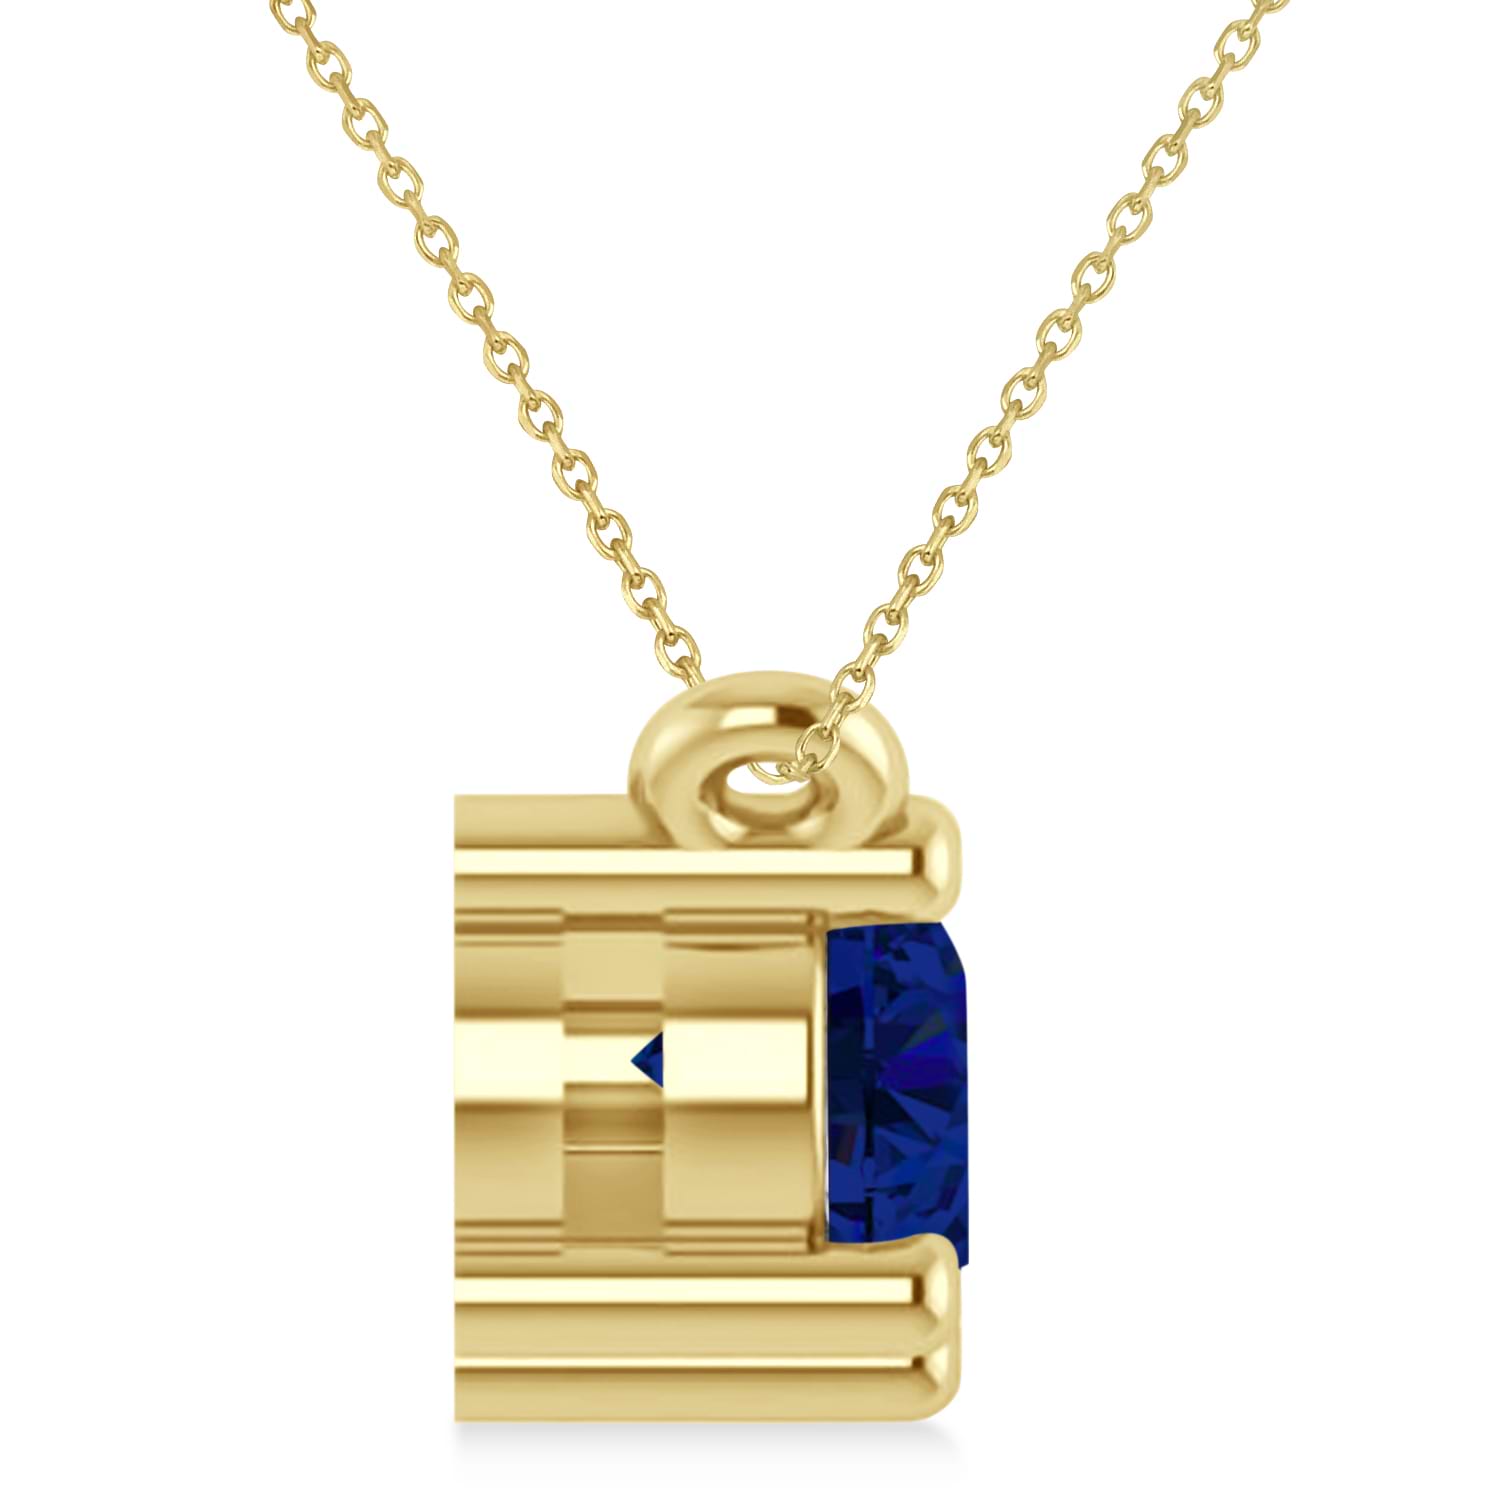 Three Stone Diamond & Blue Sapphire Pendant Necklace 14k Yellow Gold (1.00ct)